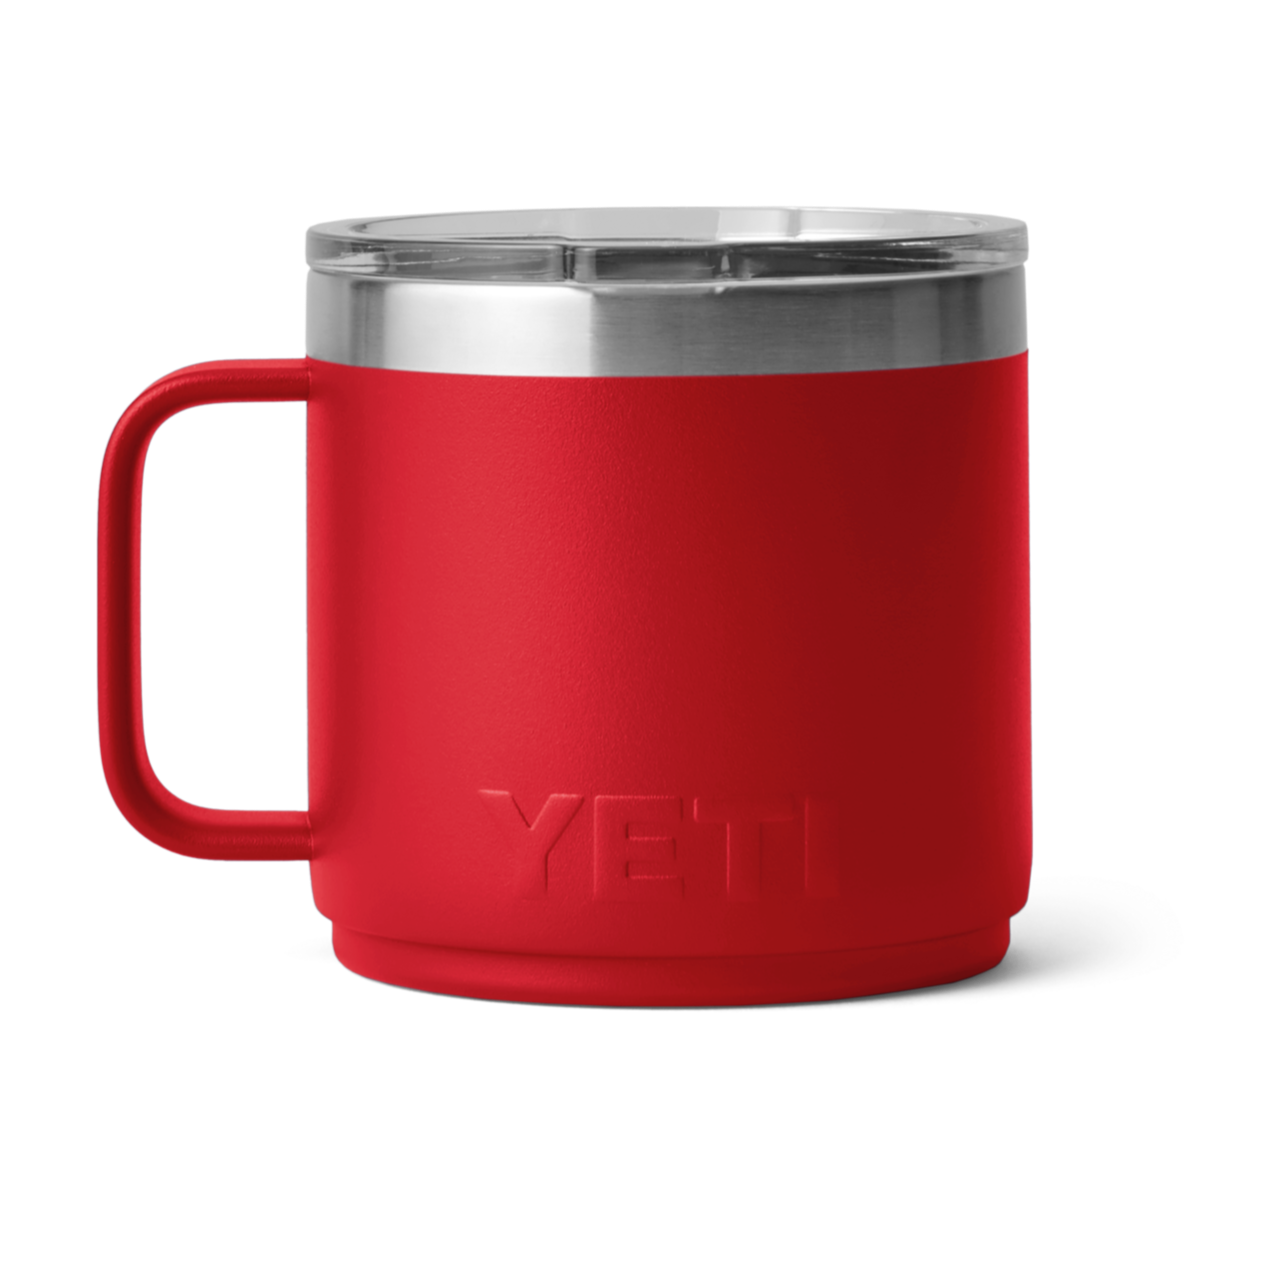 Mug Integrator - Yeti Rambler 14-oz, Most Coffee Mugs, etc.